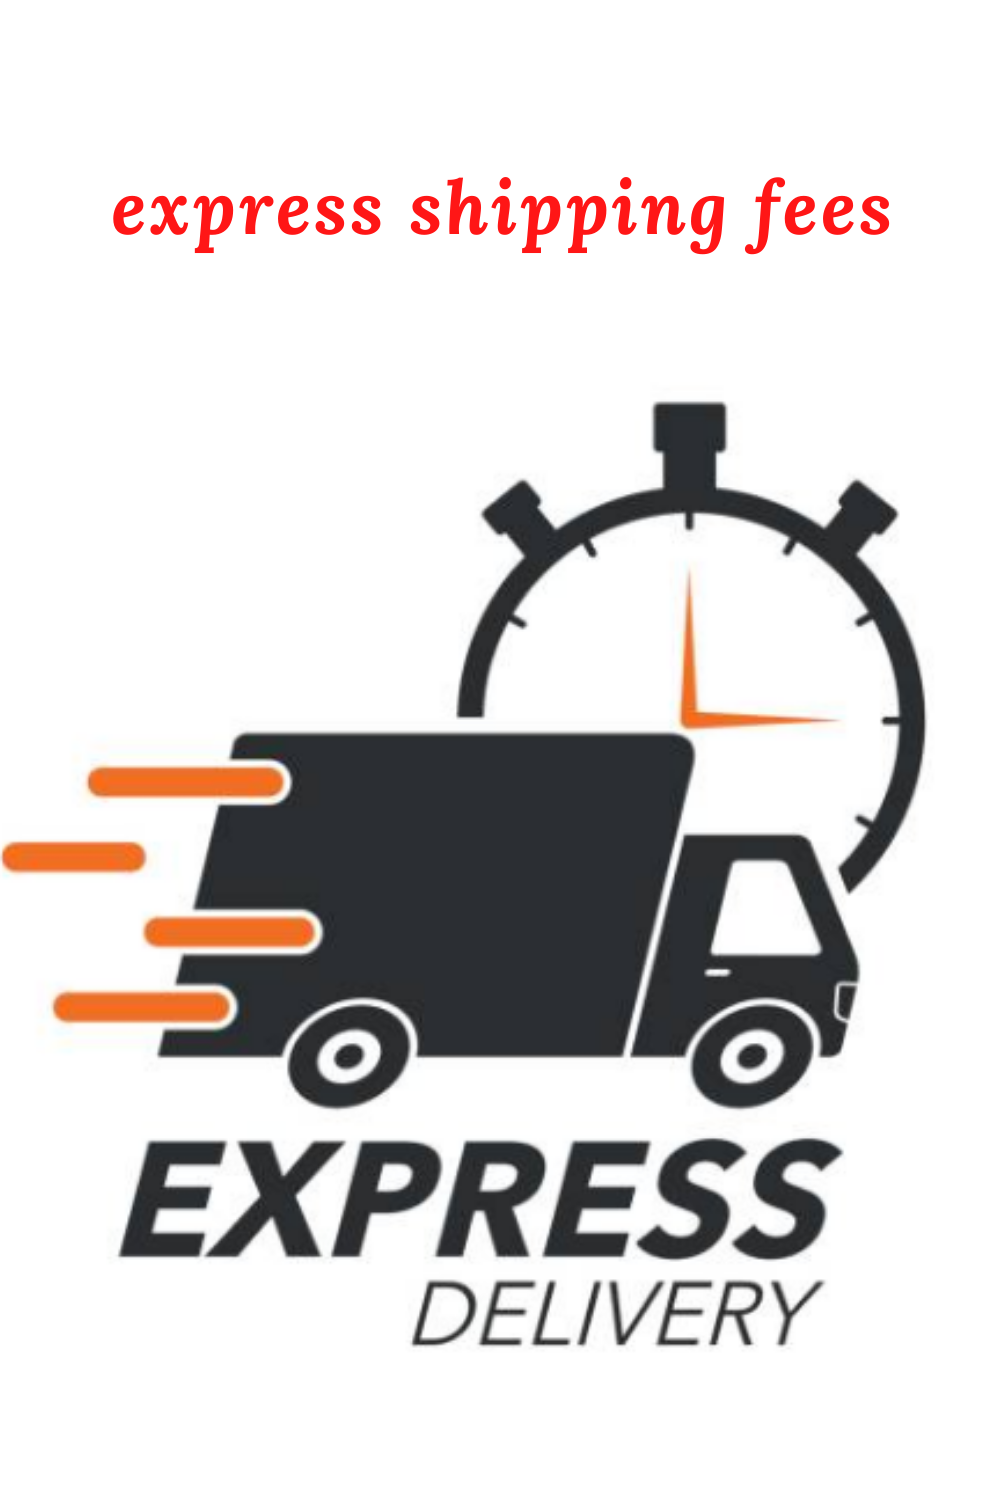 Express Shipping Fee